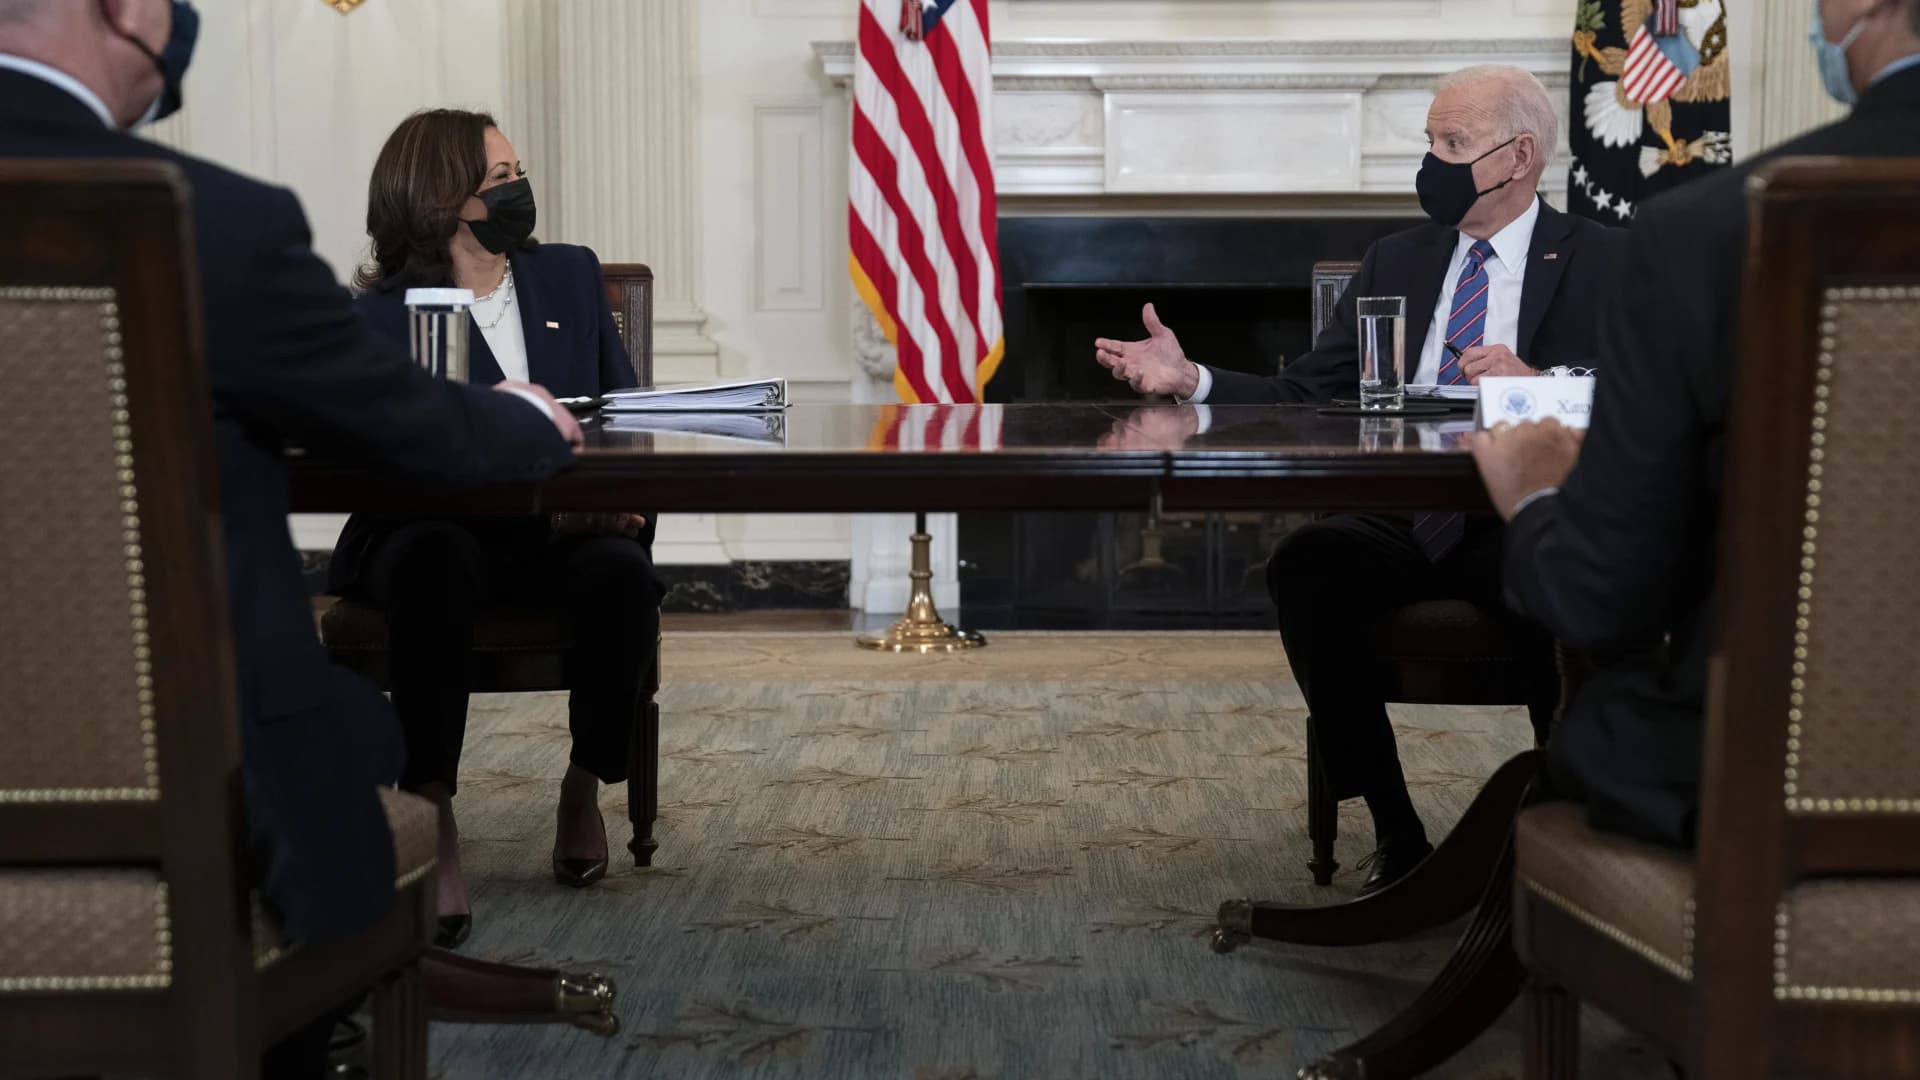 President Biden taps VP Harris to lead response to border challenges